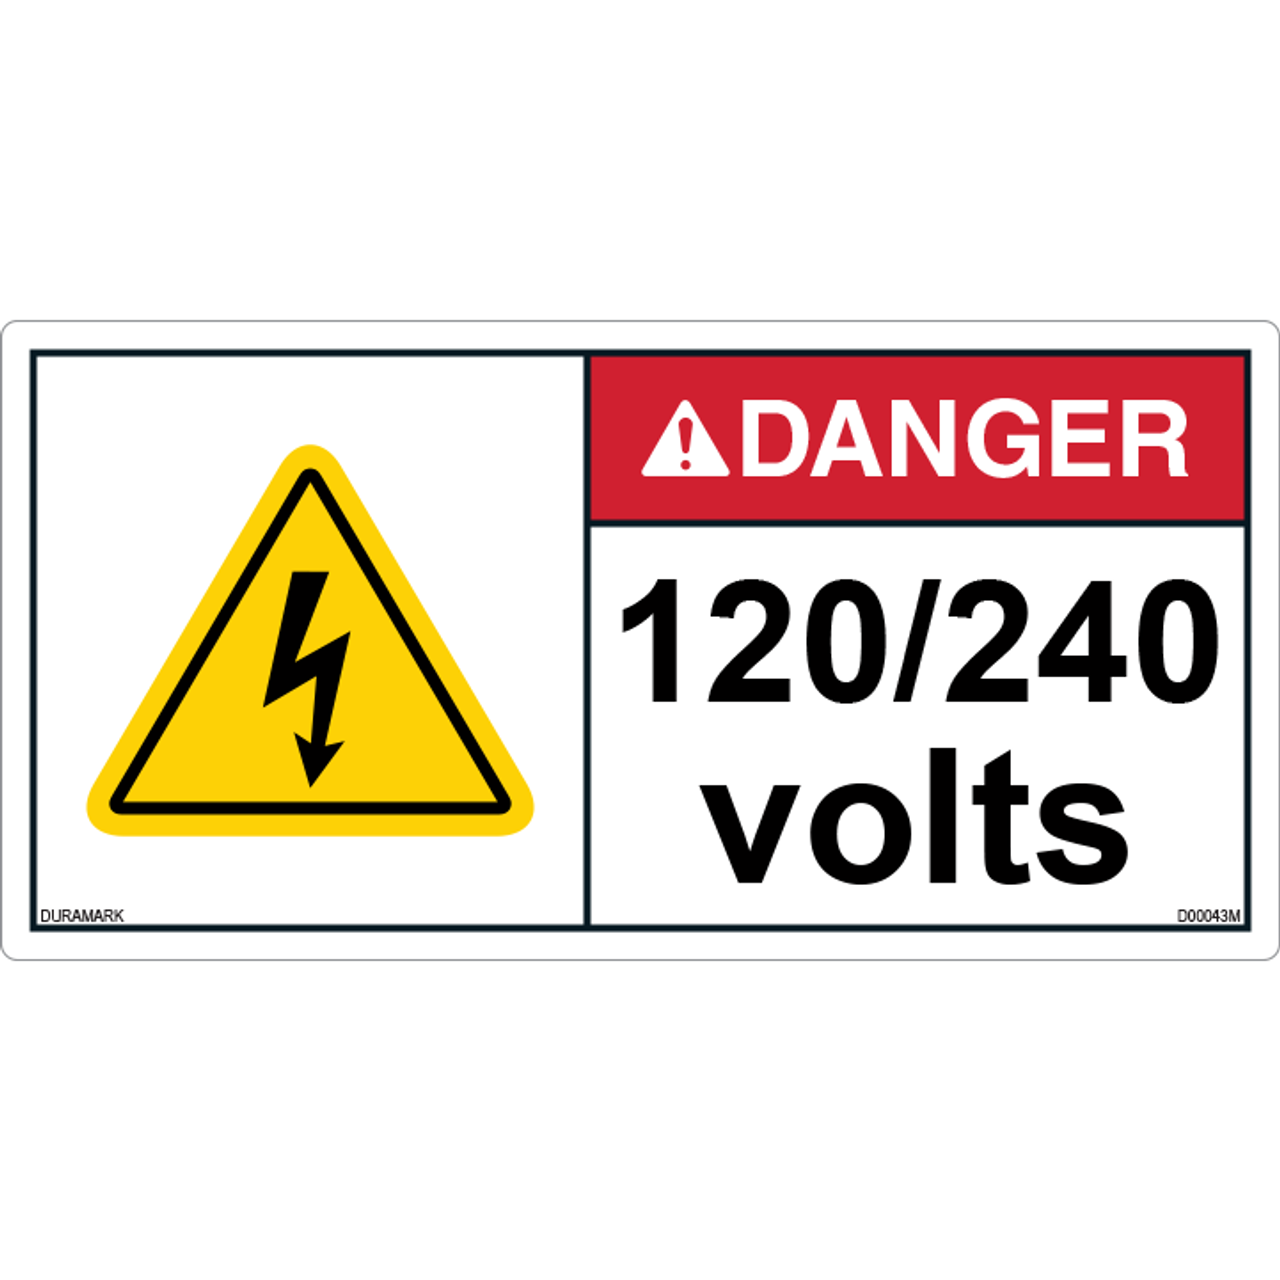 ANSI Safety Label - Danger - Electric Shock - 120/240 Volts - Horizontal